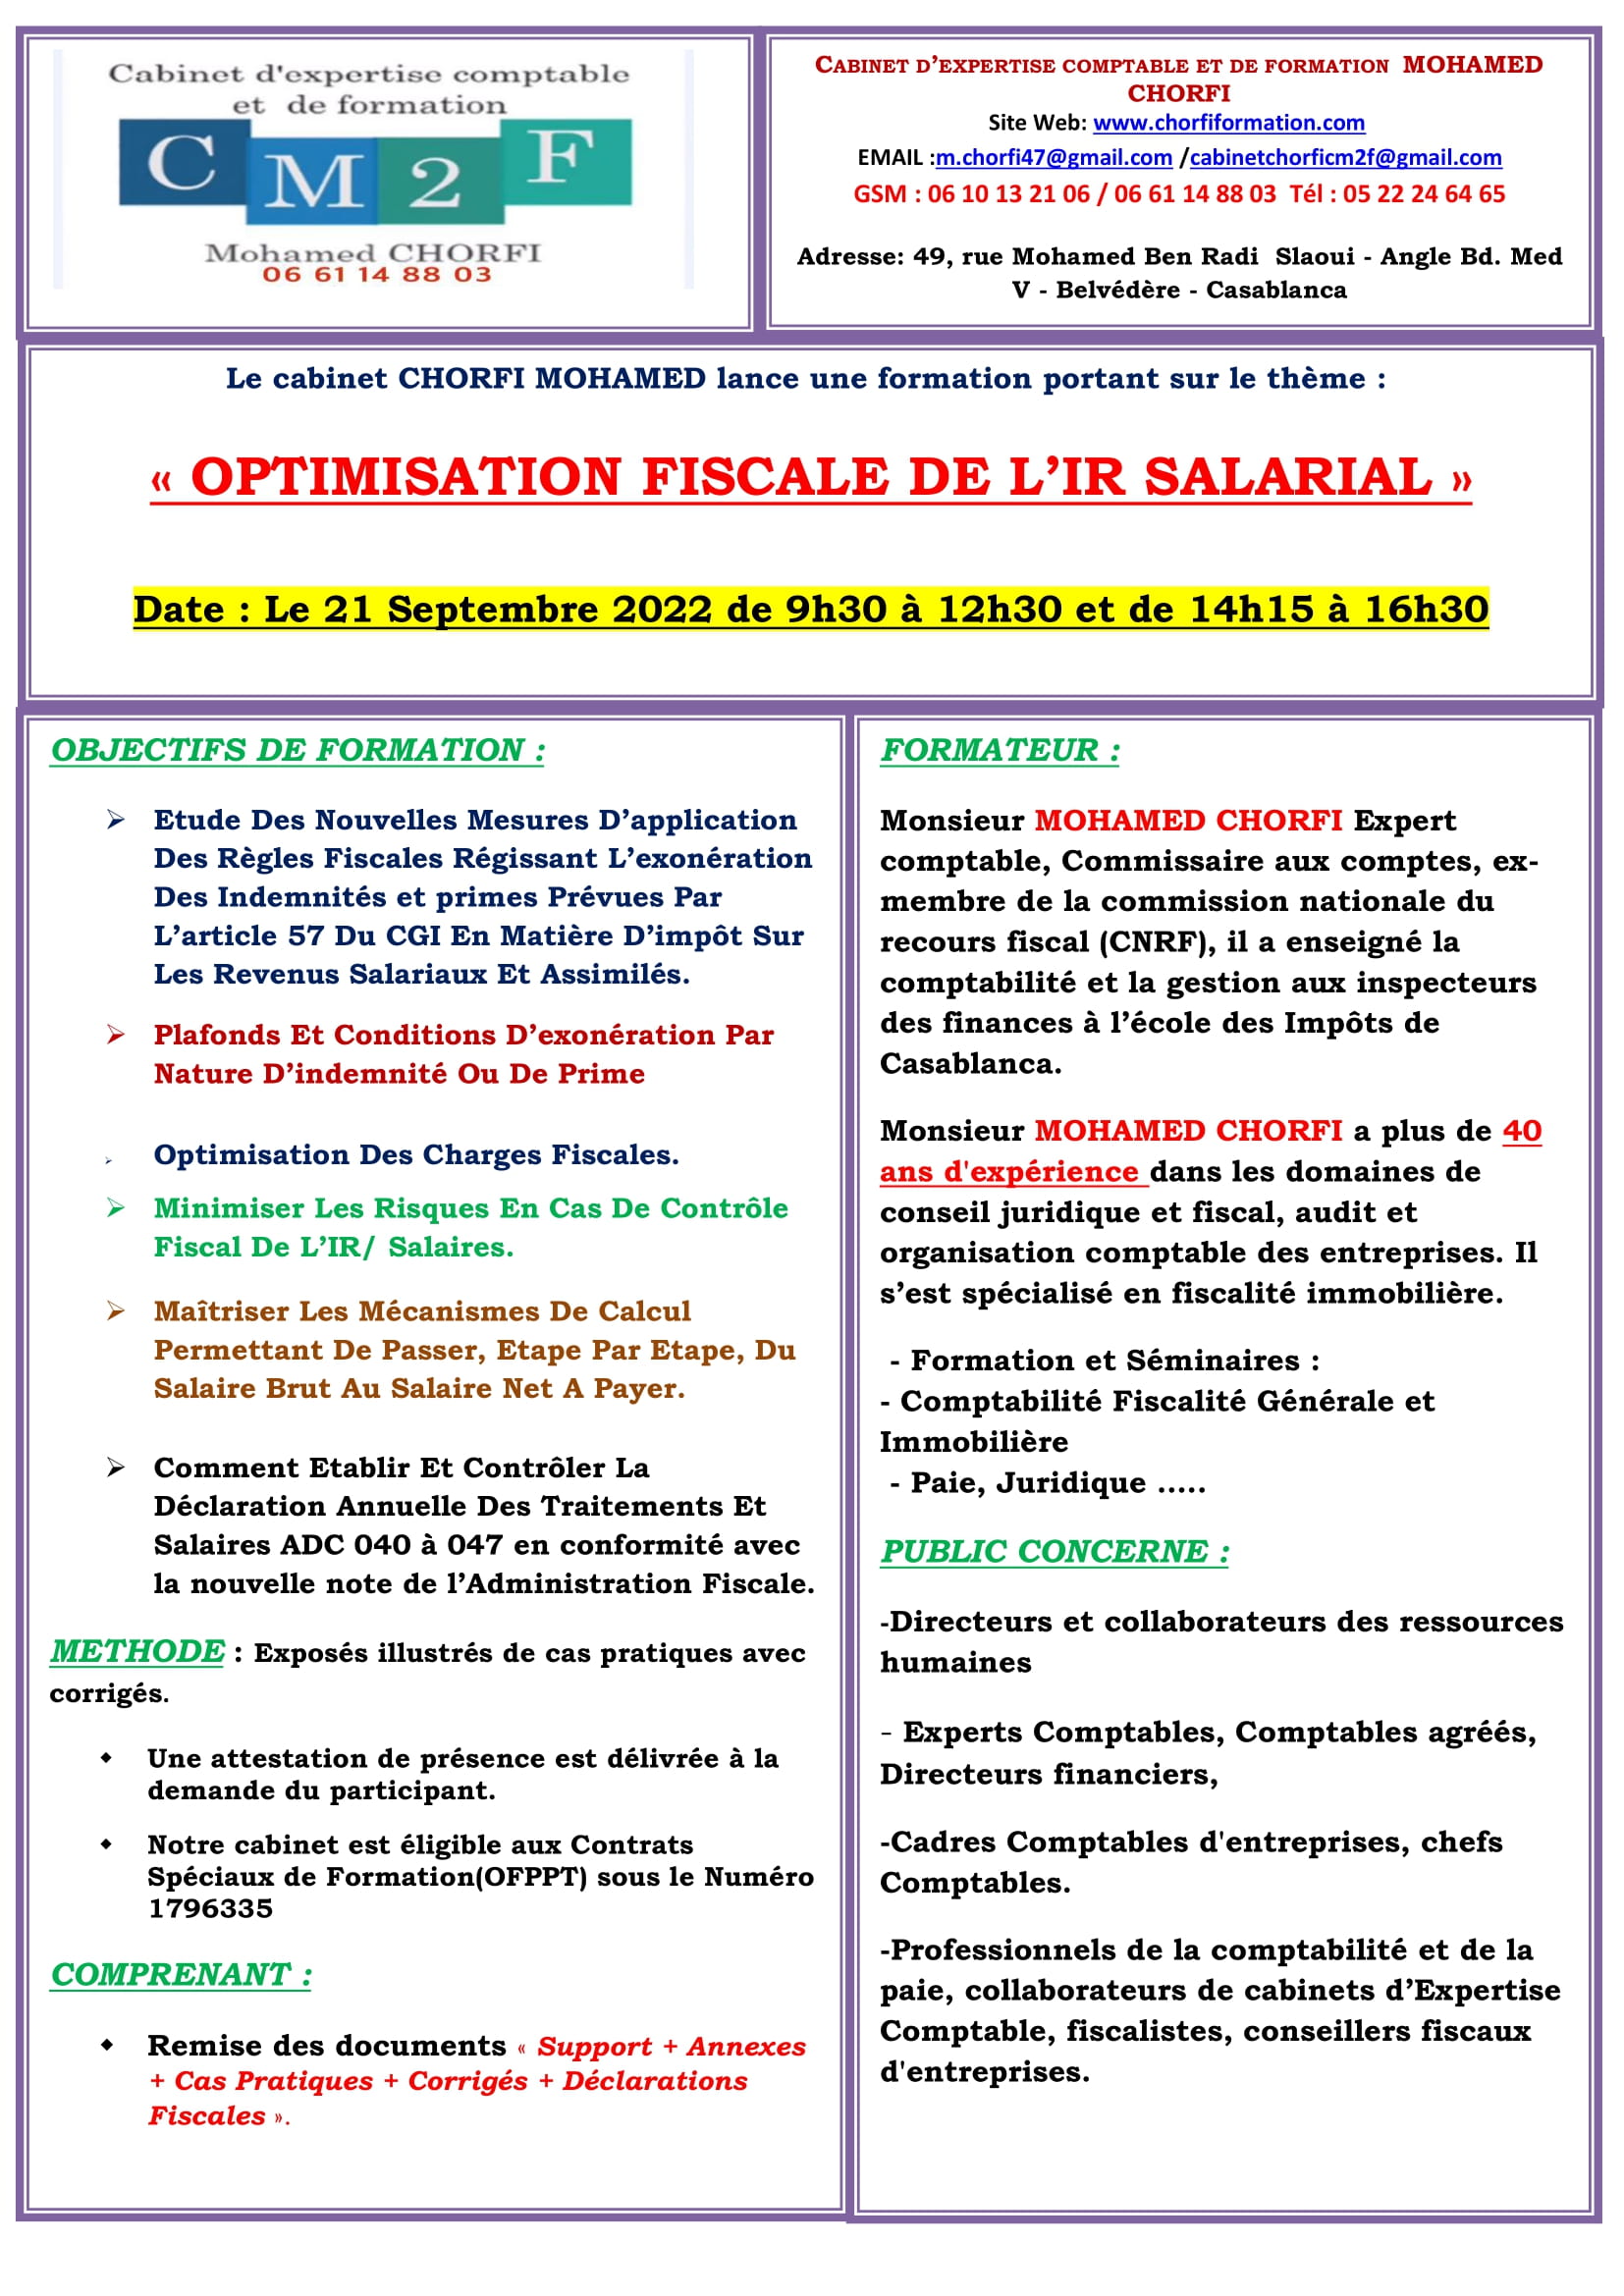 01-OPTIMISATION FISCALE DE L’IR SALARIAL-1